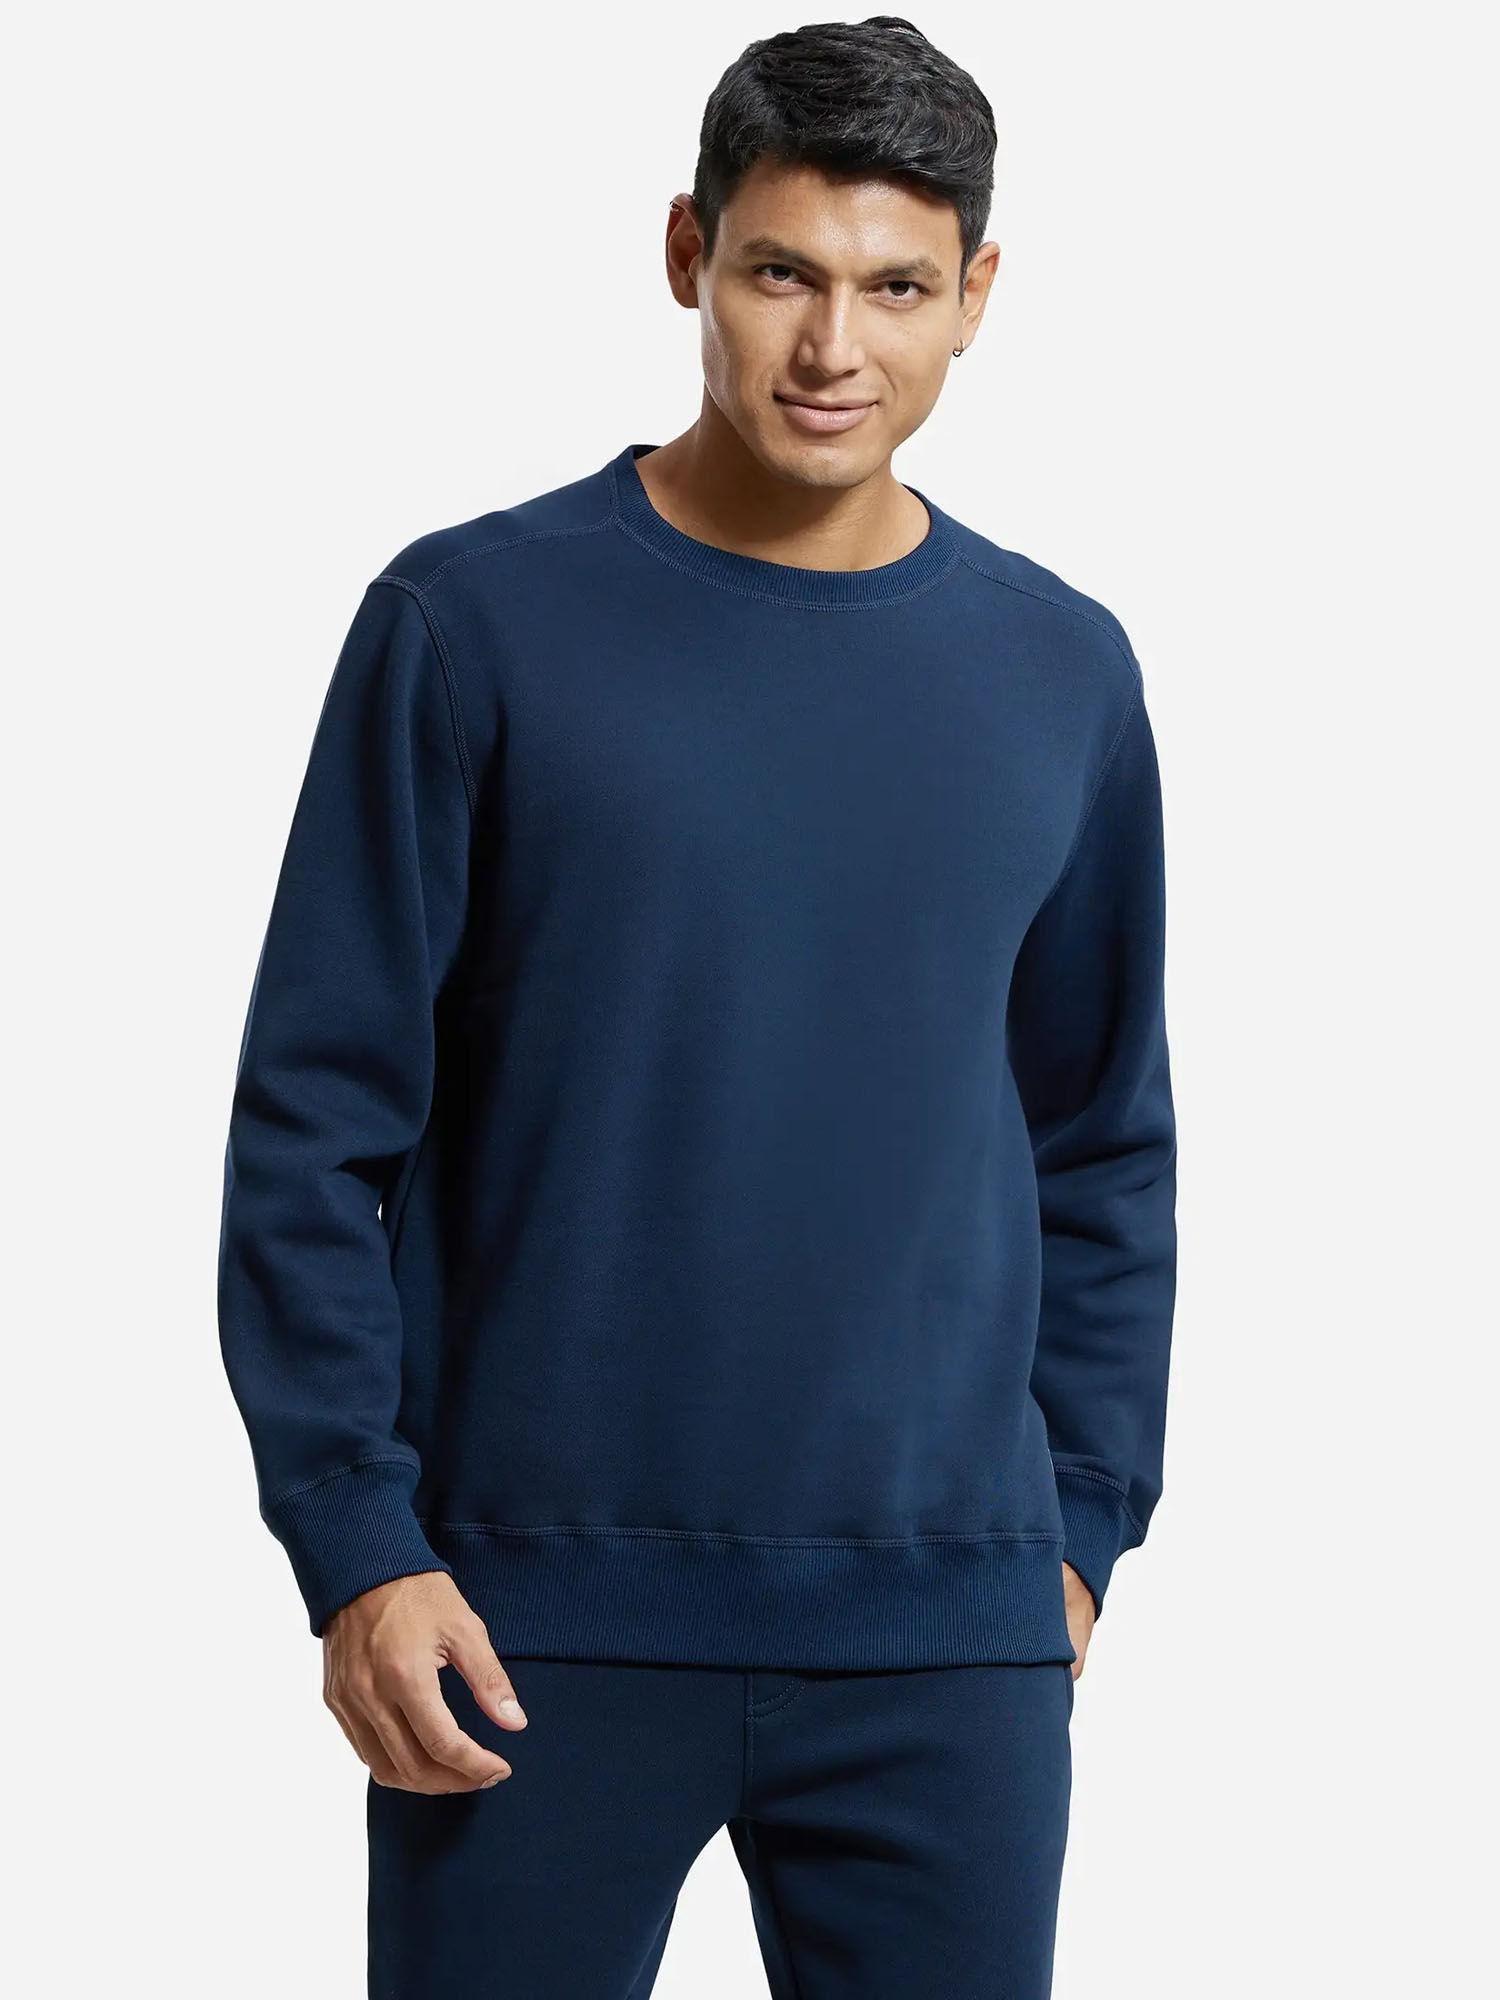 us92 men's super combed cotton rich fleece fabric navy blue sweatshirt